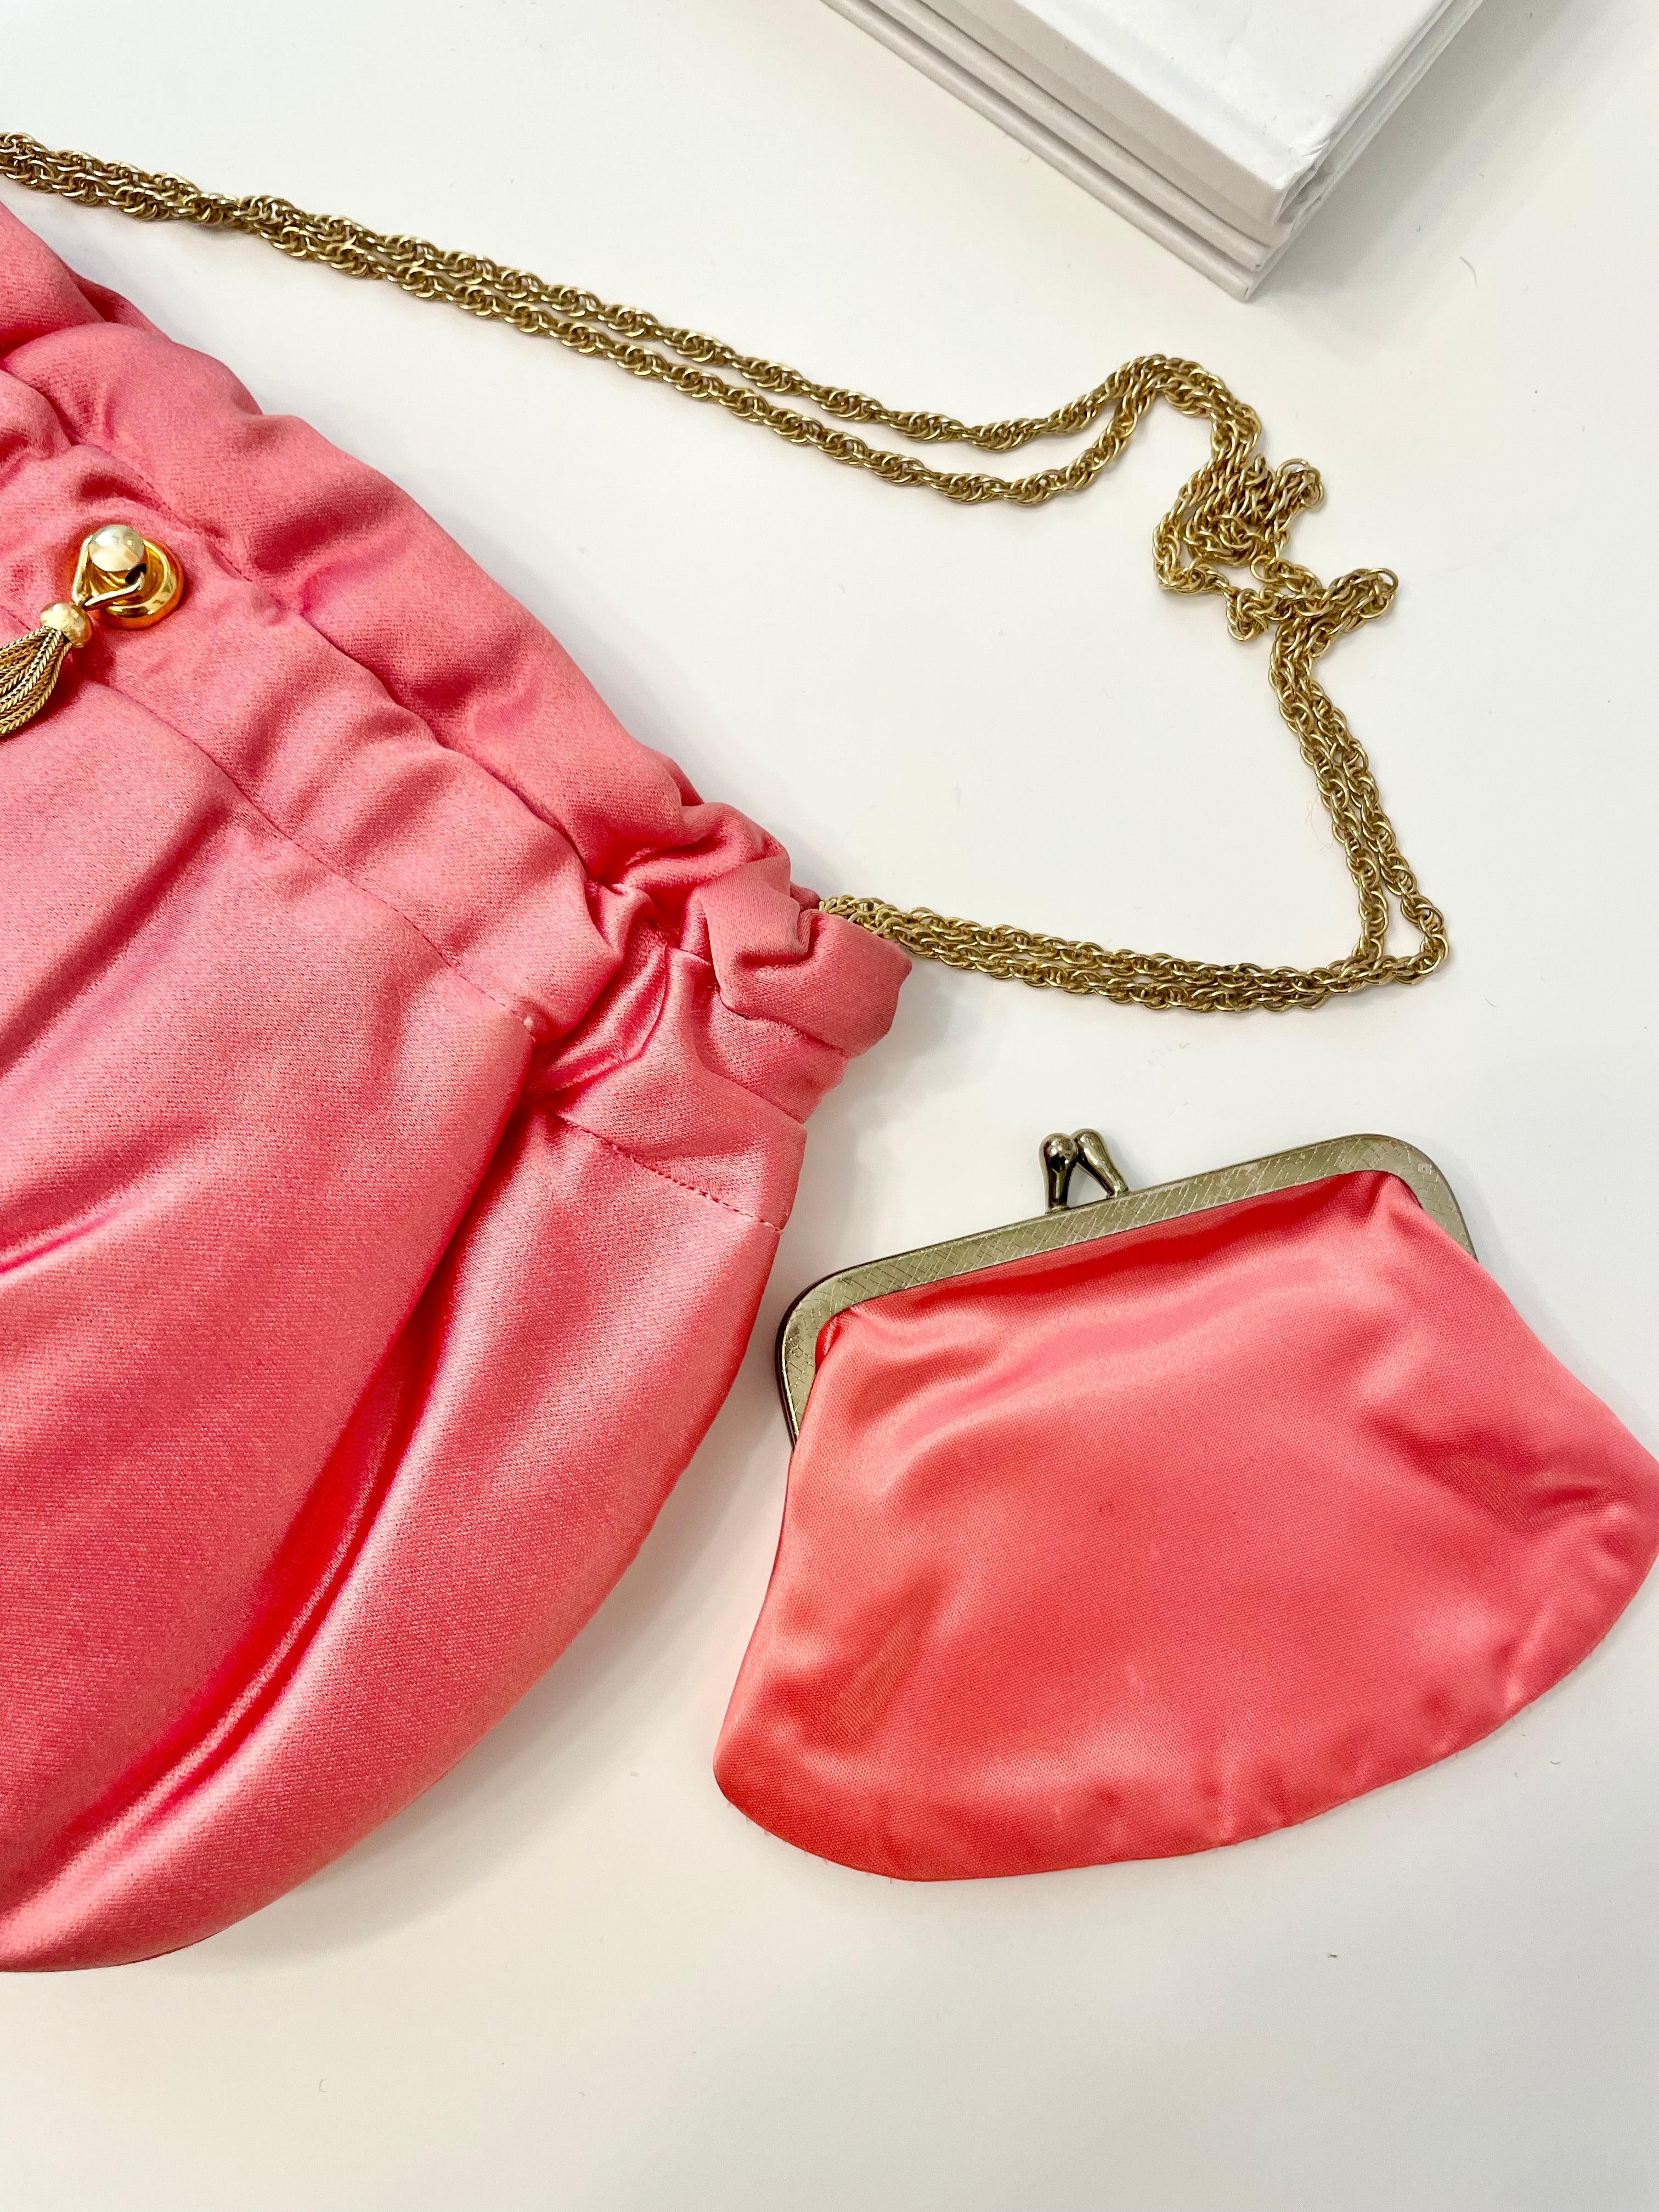 Vintage stunning M Morris splendid pink satin party gal evening bag!